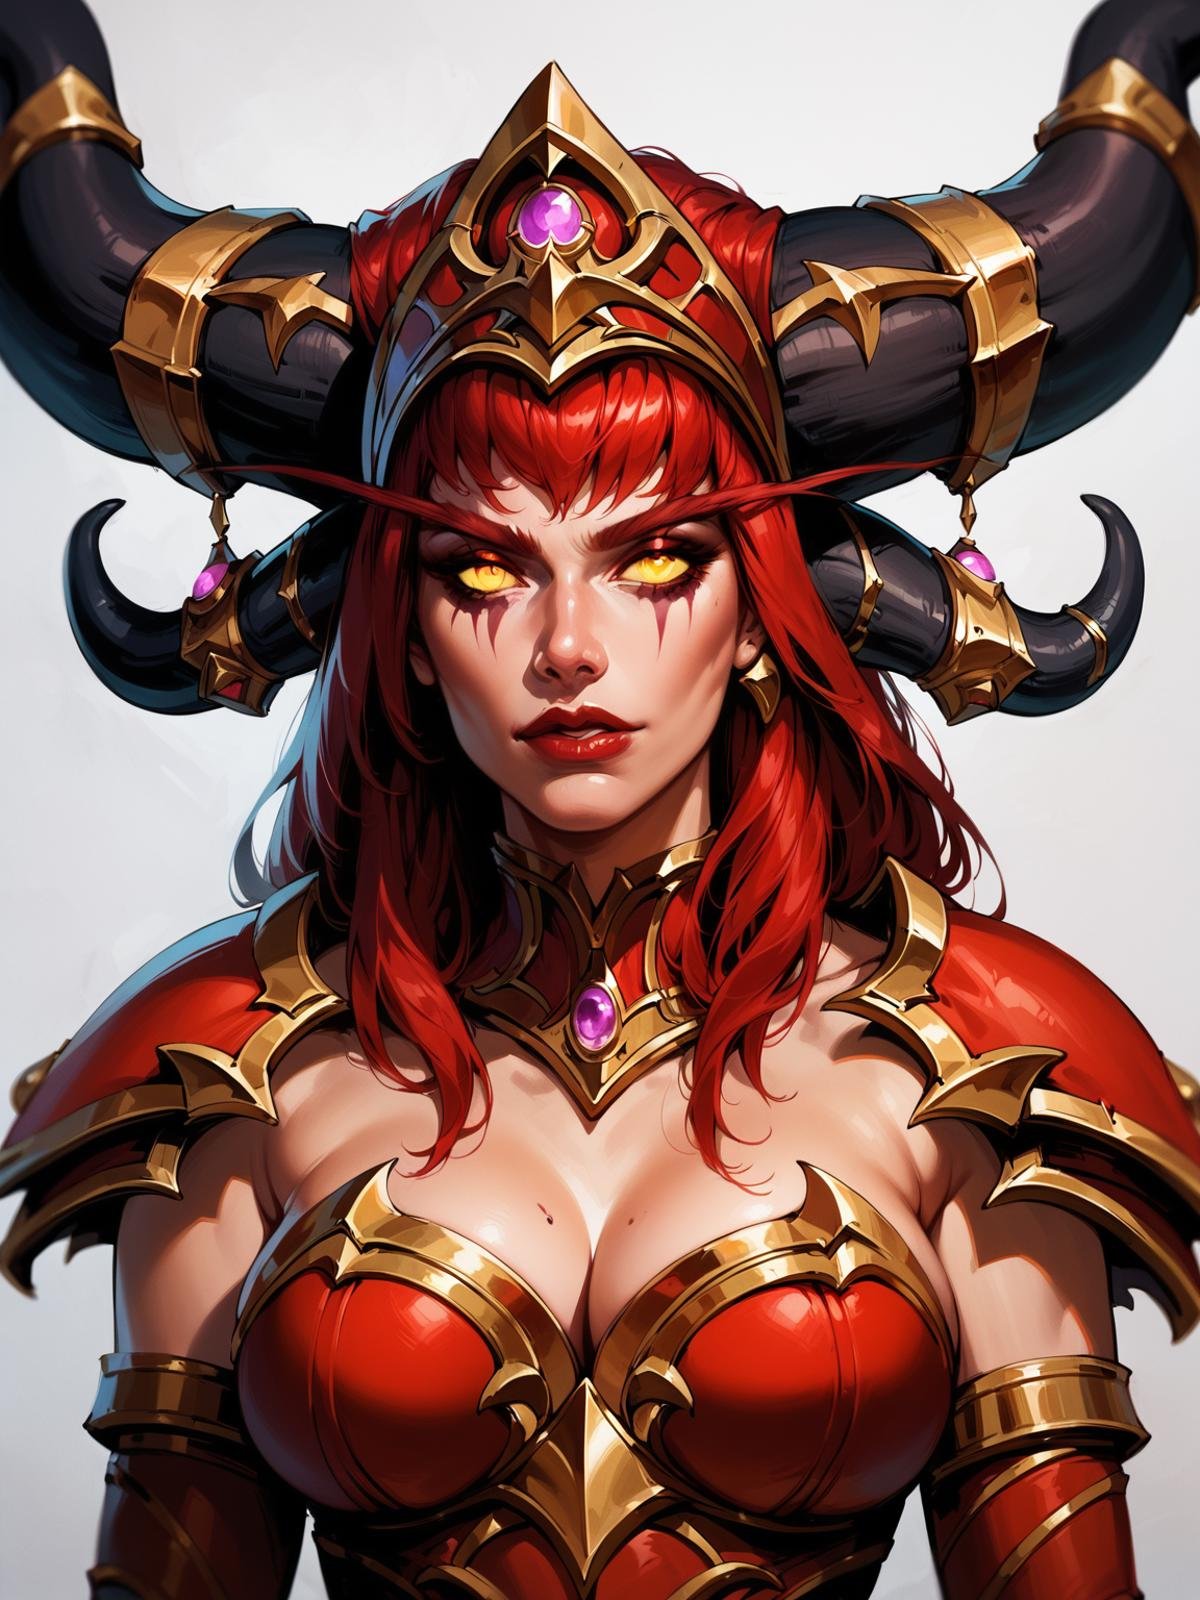 score_8_up, score_7_up, portrait of beautiful alexstrasza, big breasts, red armor, warcraft, 